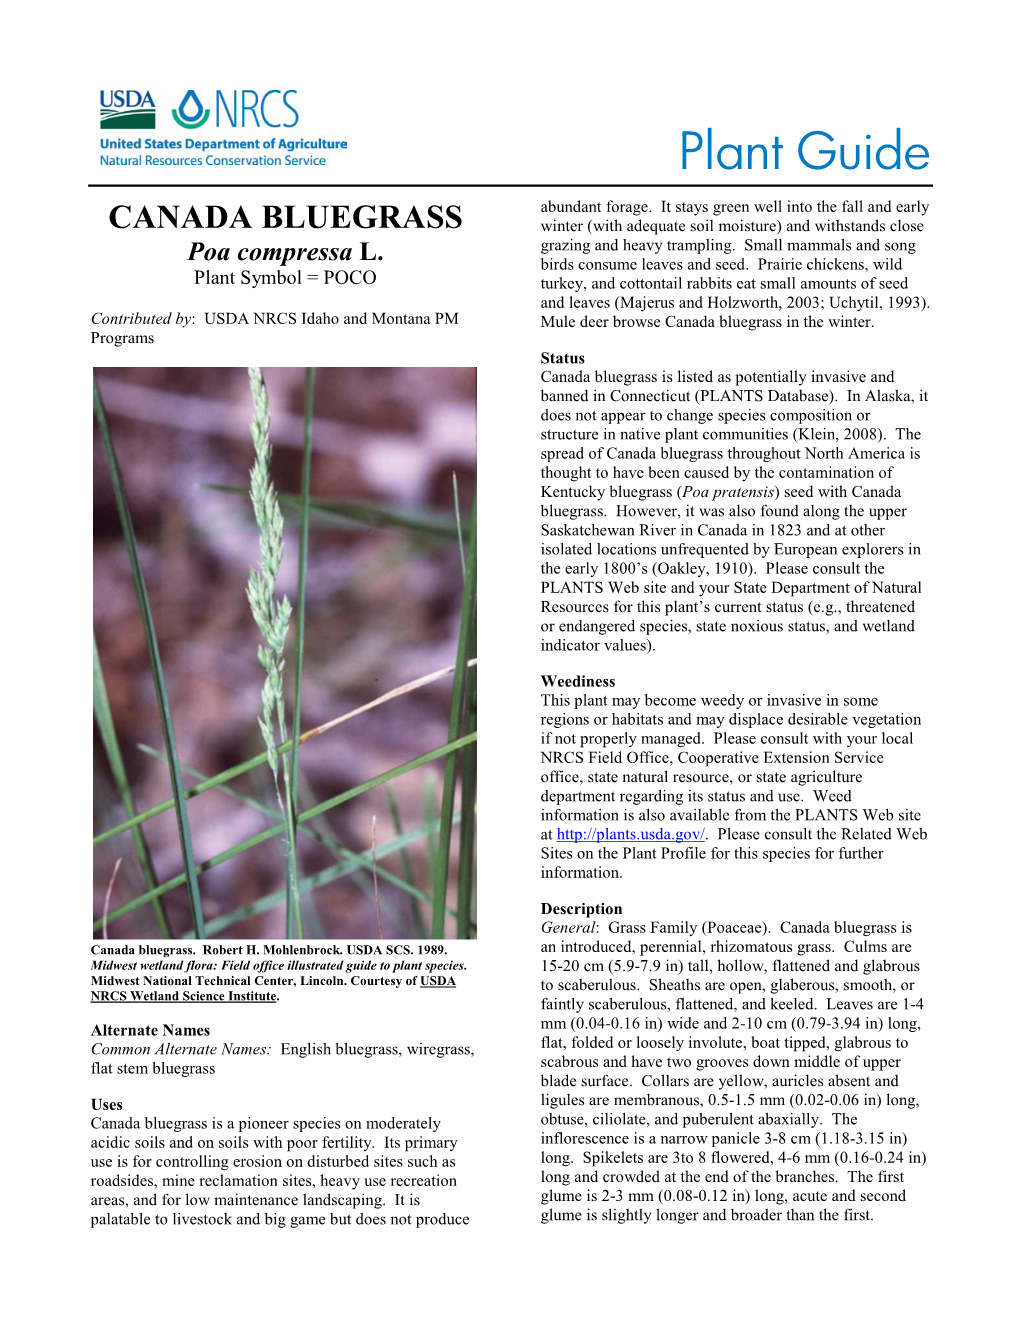 Canada Bluegrass (Poa Compressa) Plant Guide